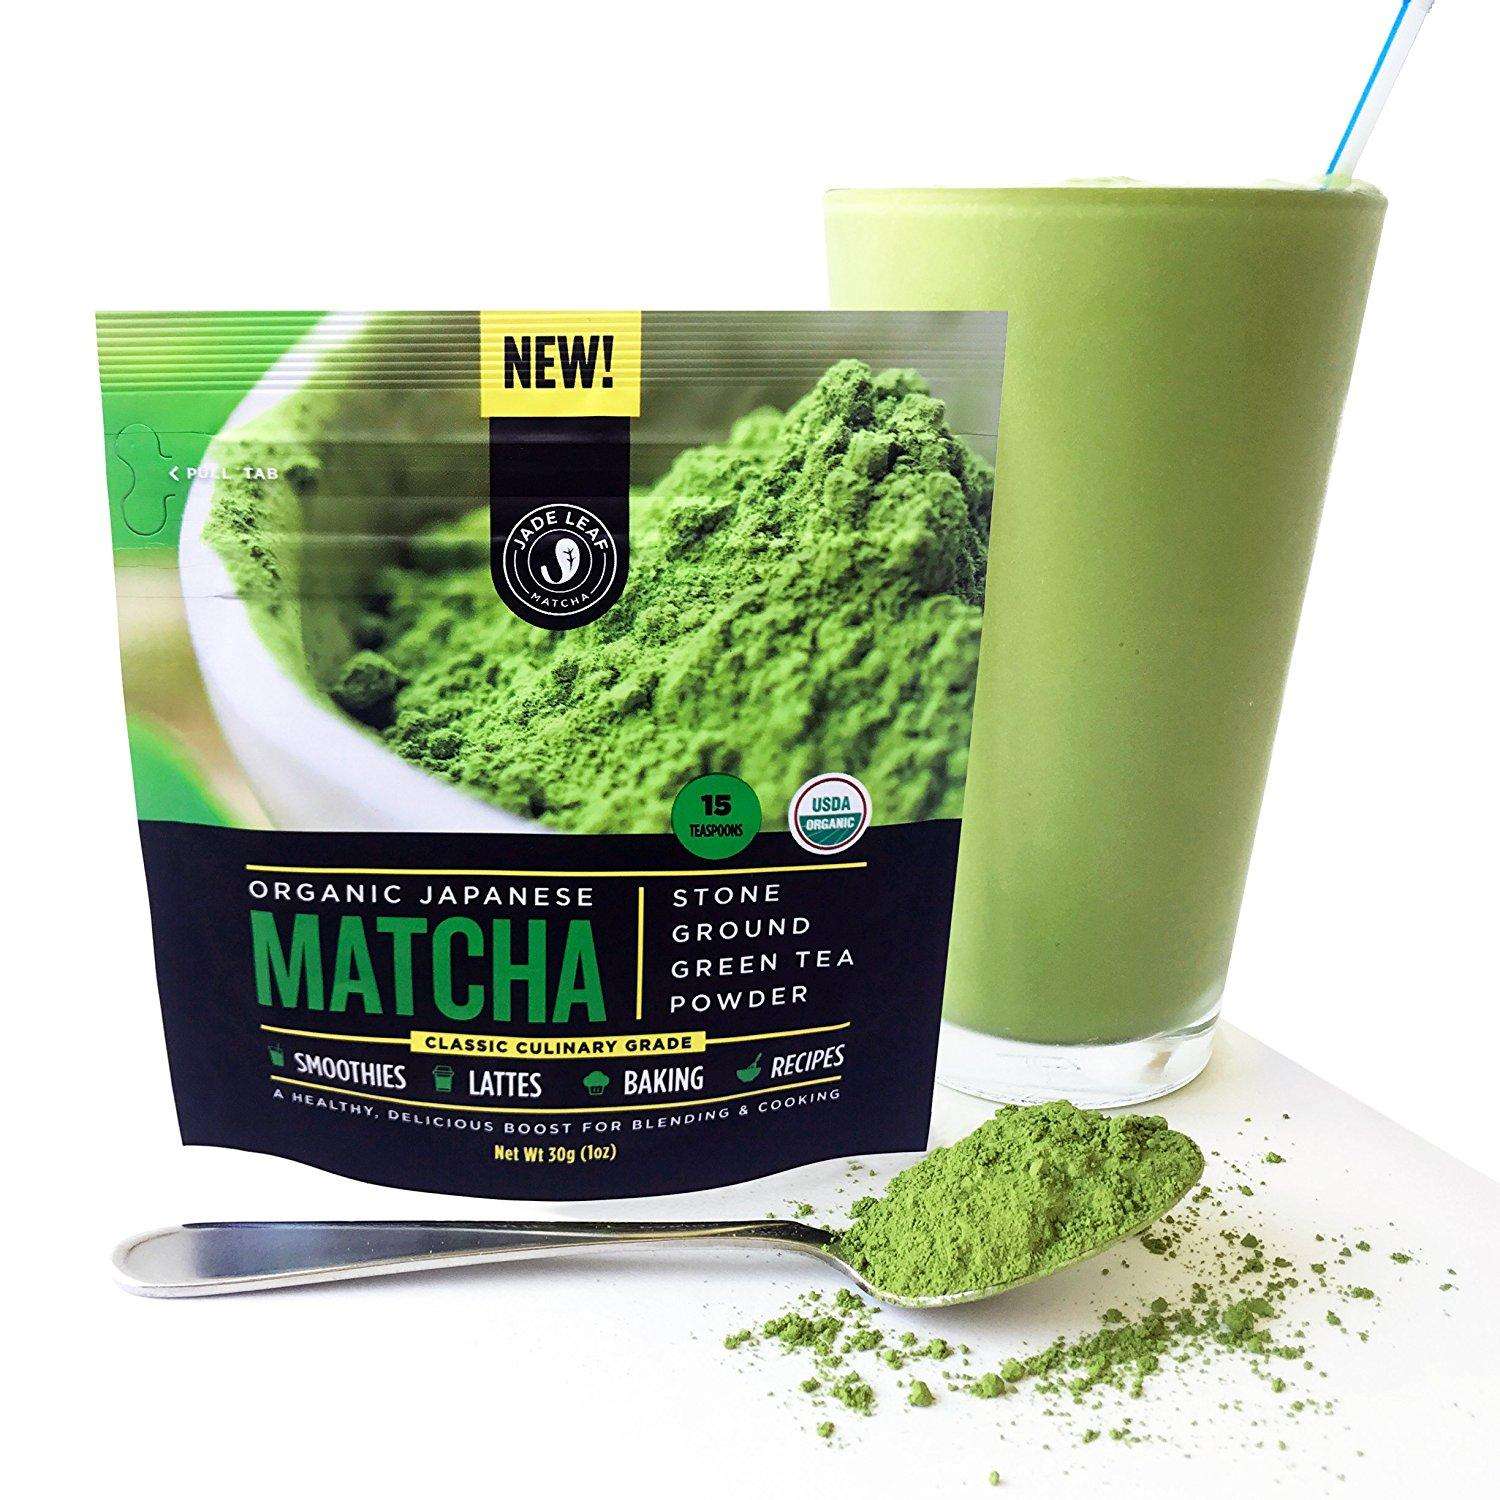 Jade Leaf Matcha Green Tea Powder for $7.96